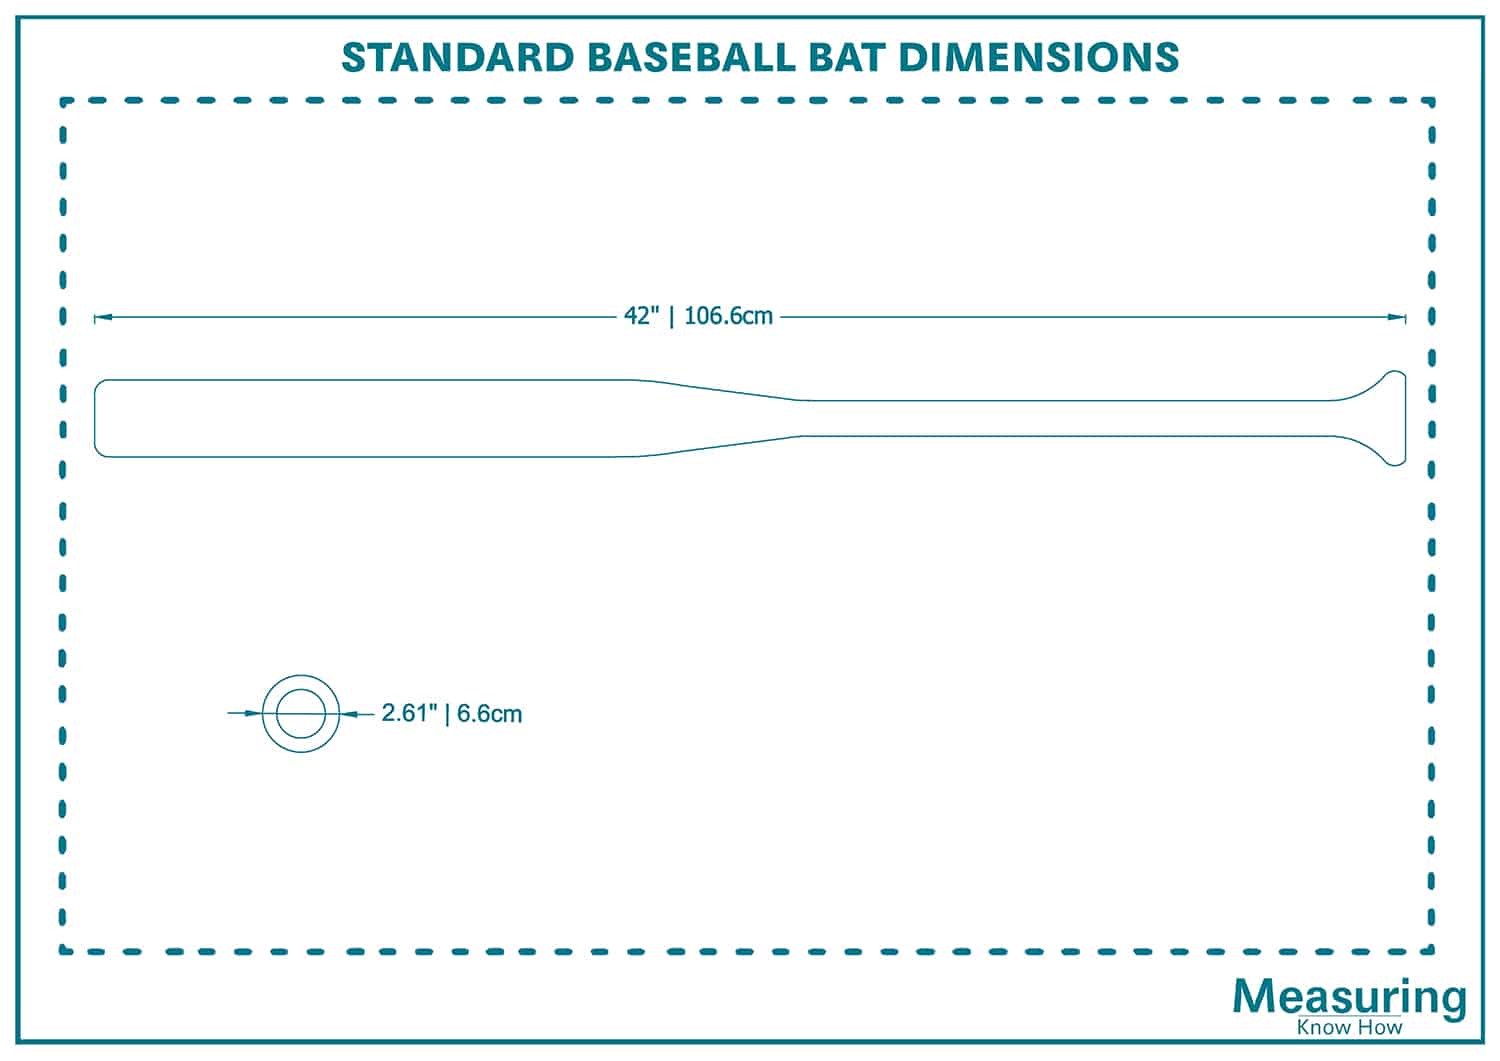 Standard baseball bat dimensions